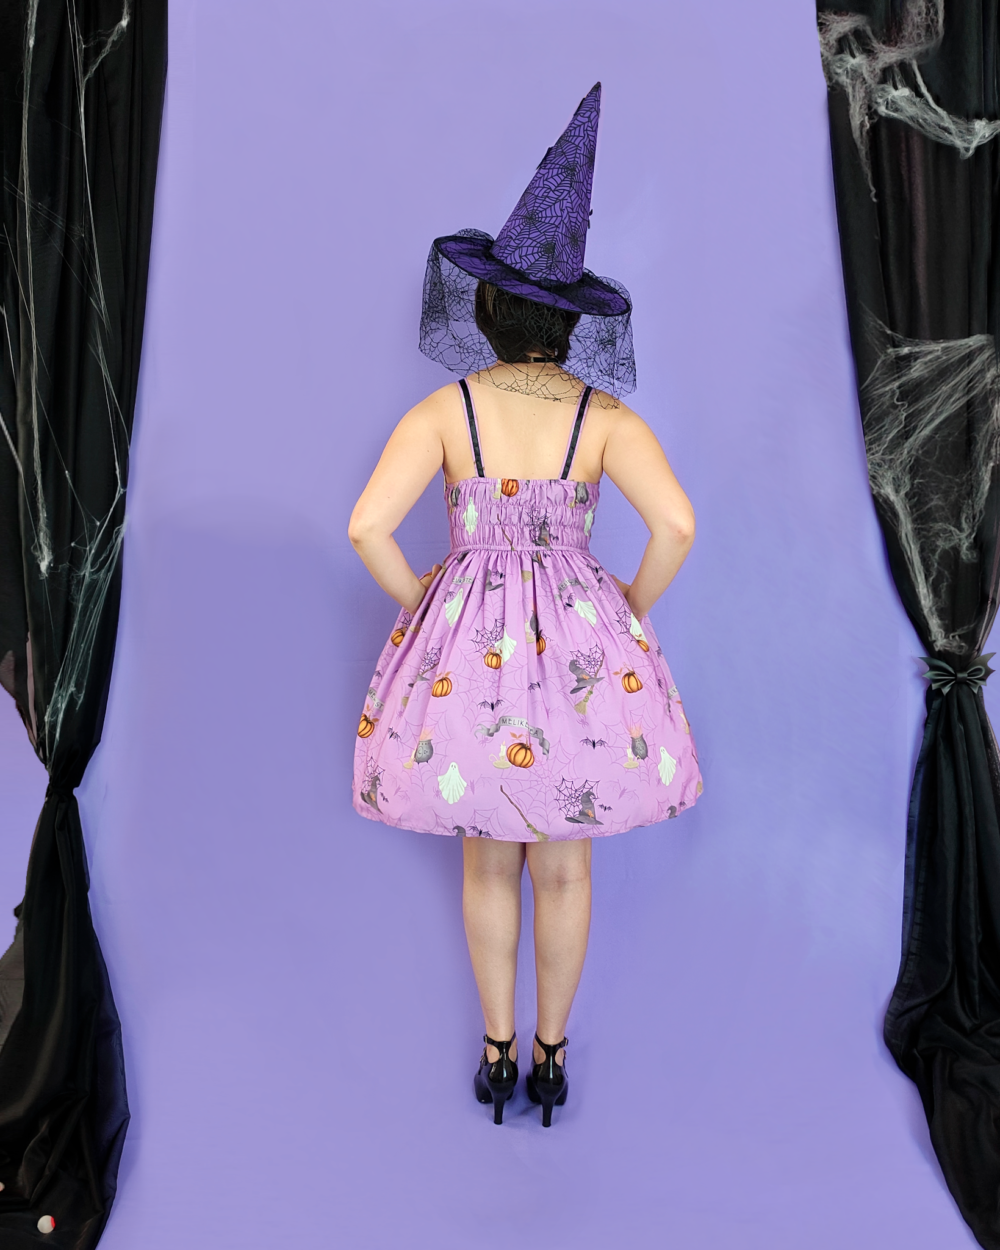 Halloween sleeveless dress in lavender colourway by melikestea